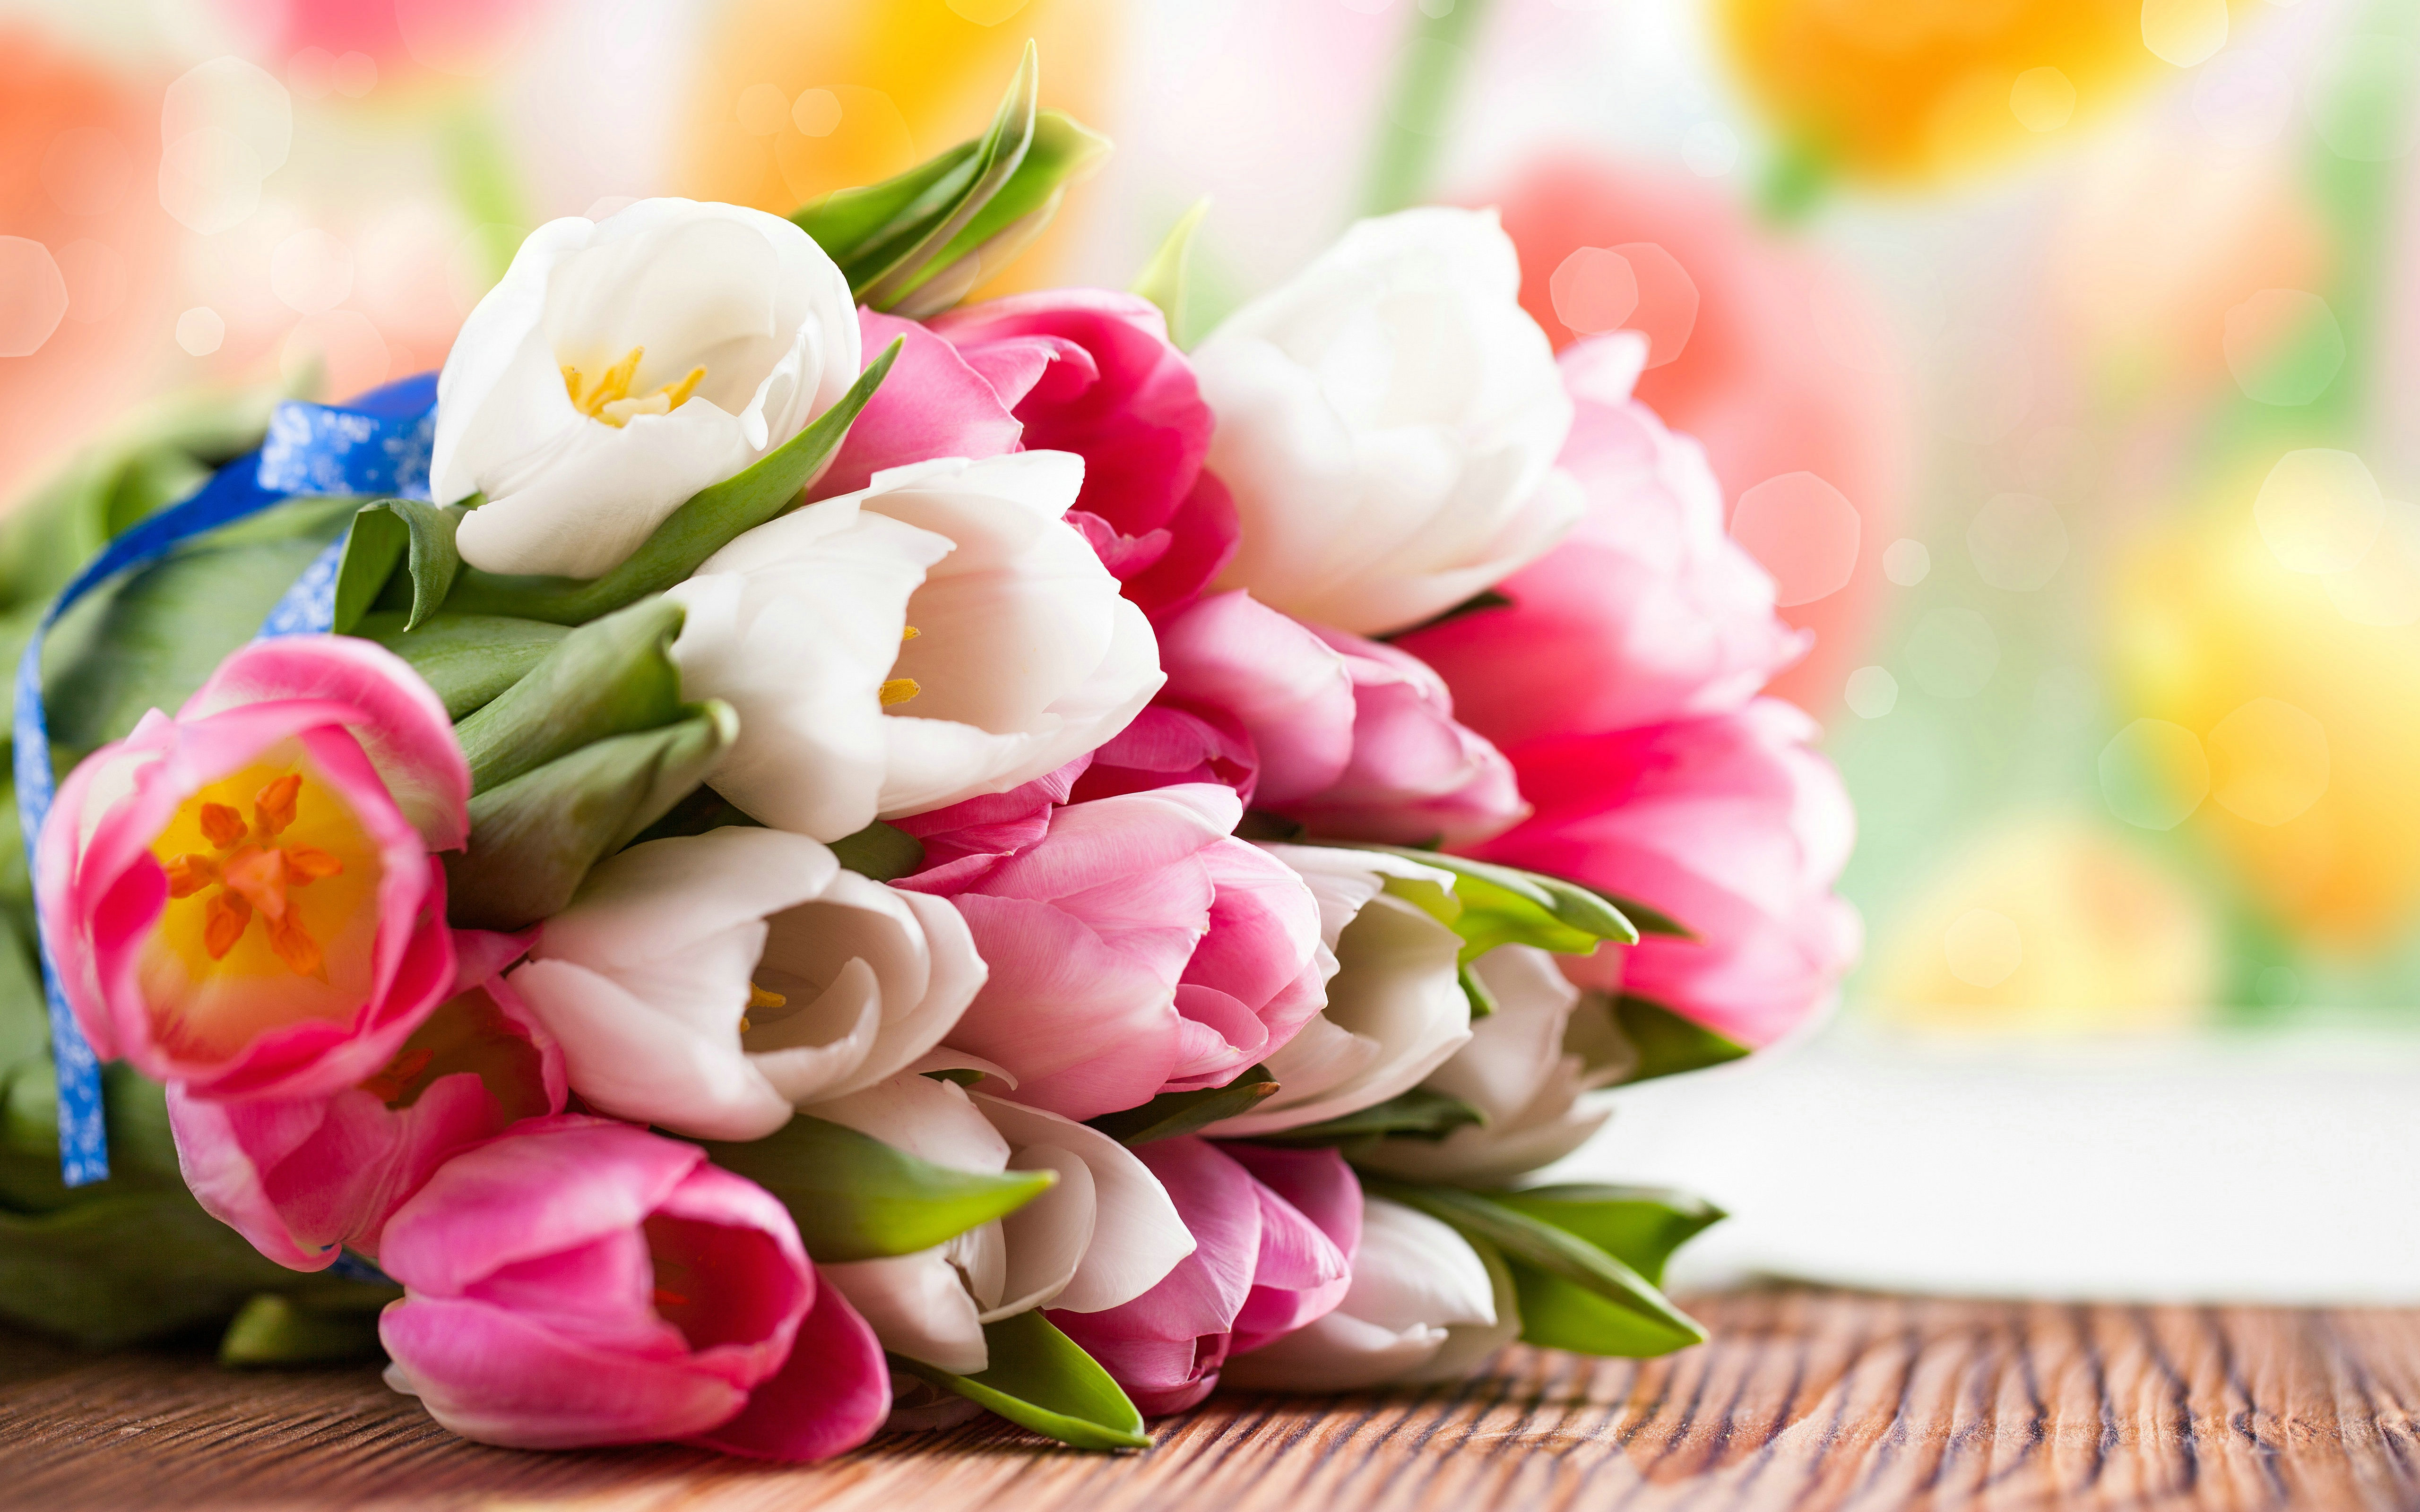 377935 descargar imagen tierra/naturaleza, tulipán, ramo, de cerca, flor, flor rosa, flor blanca, flores: fondos de pantalla y protectores de pantalla gratis